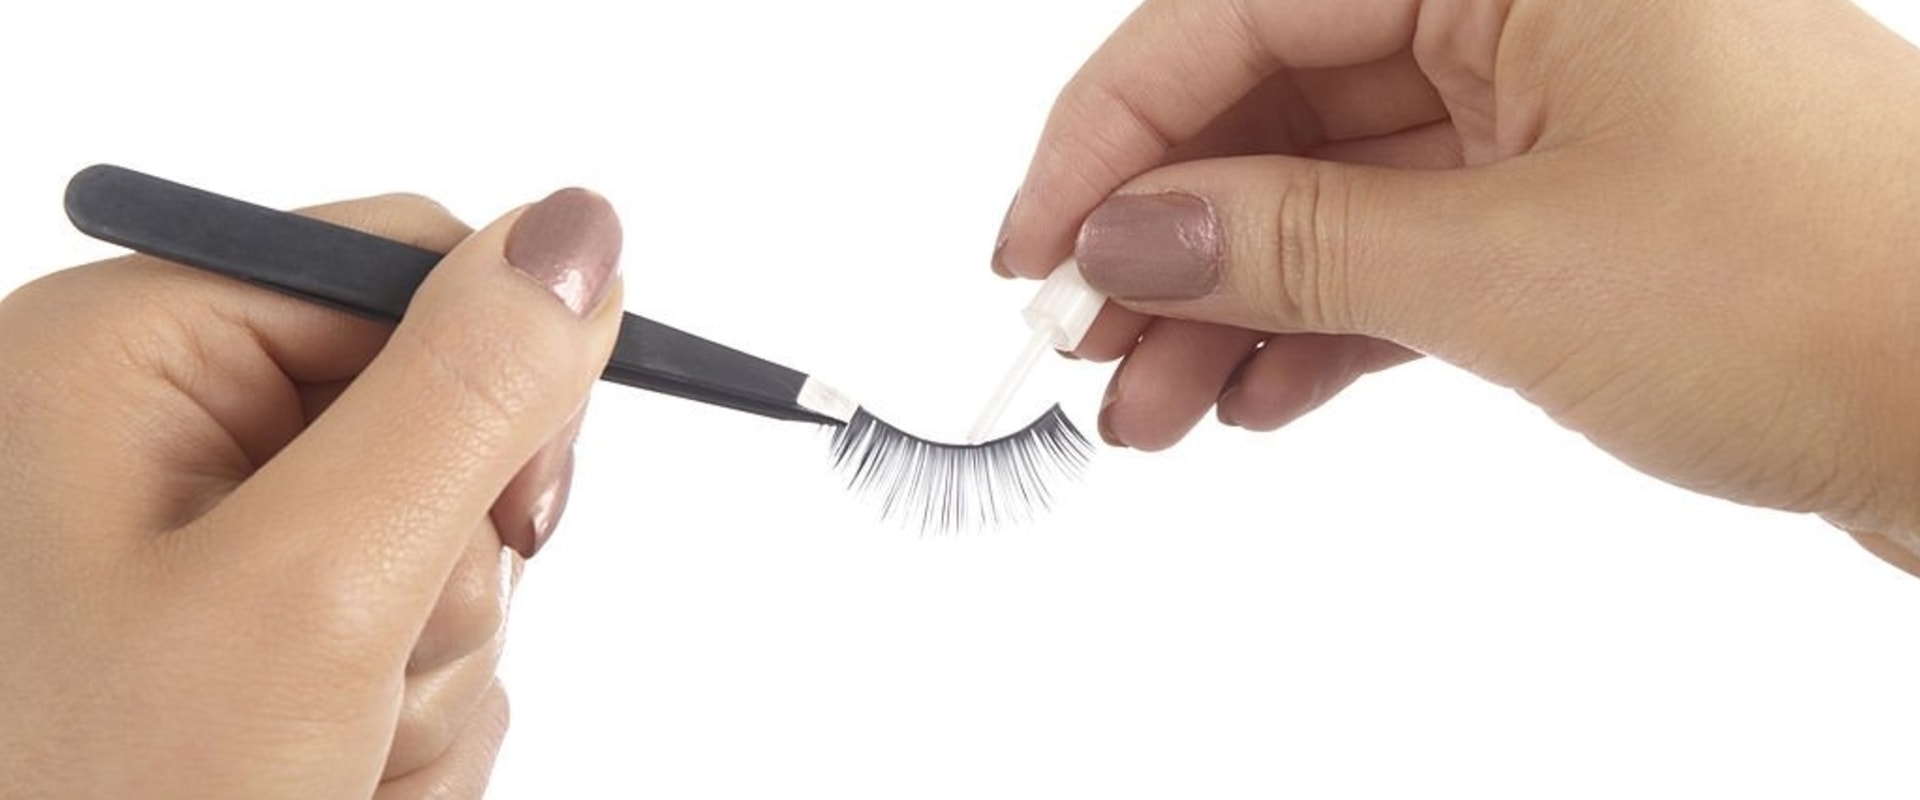 What happens if you leave eyelash glue on overnight?